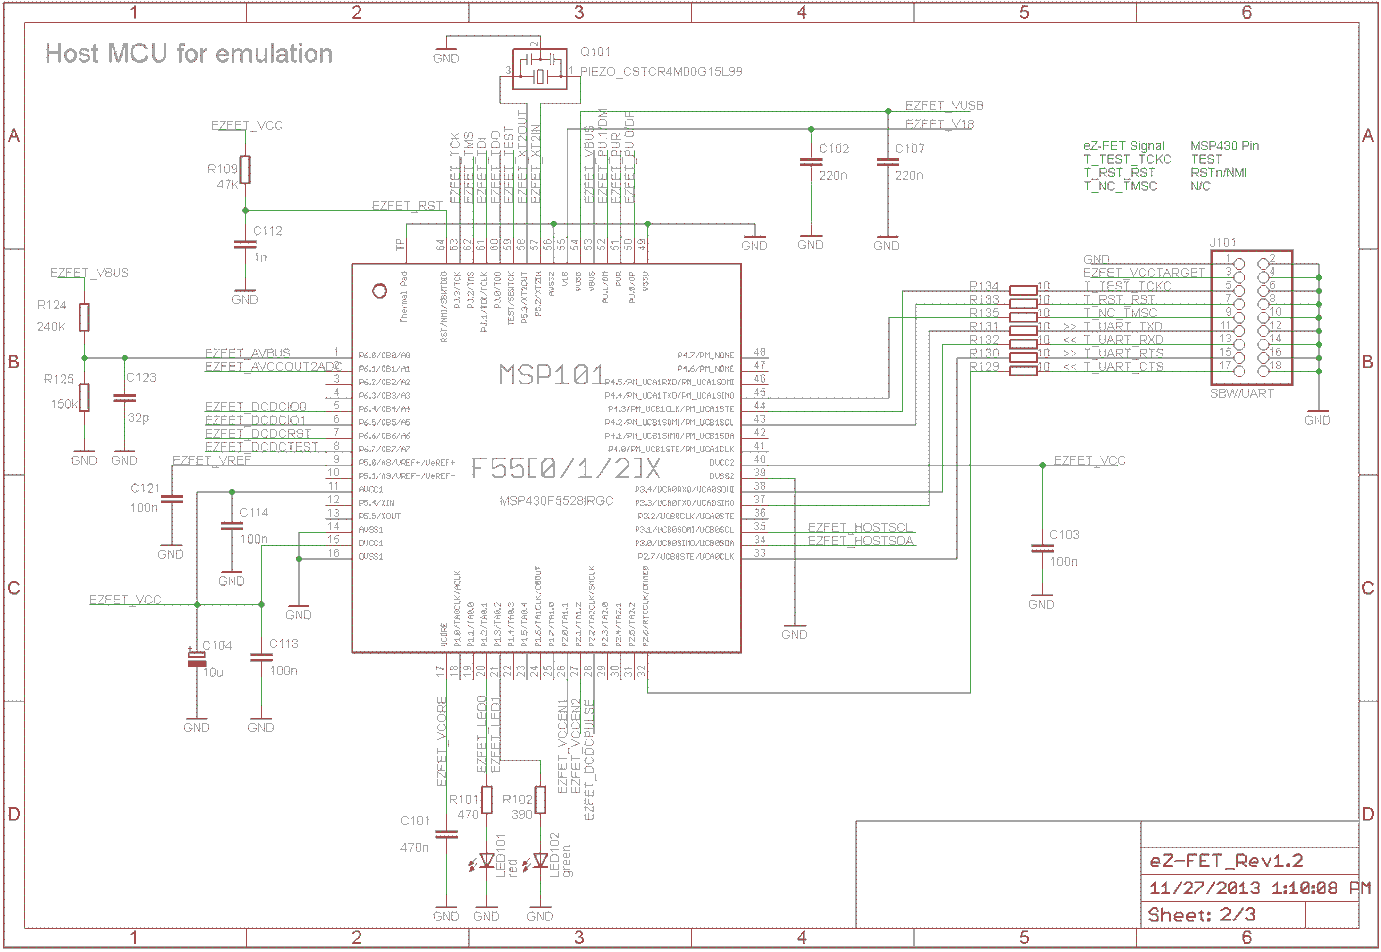 schematic-ez-fet-rev-1p2-emulation-mcu.png